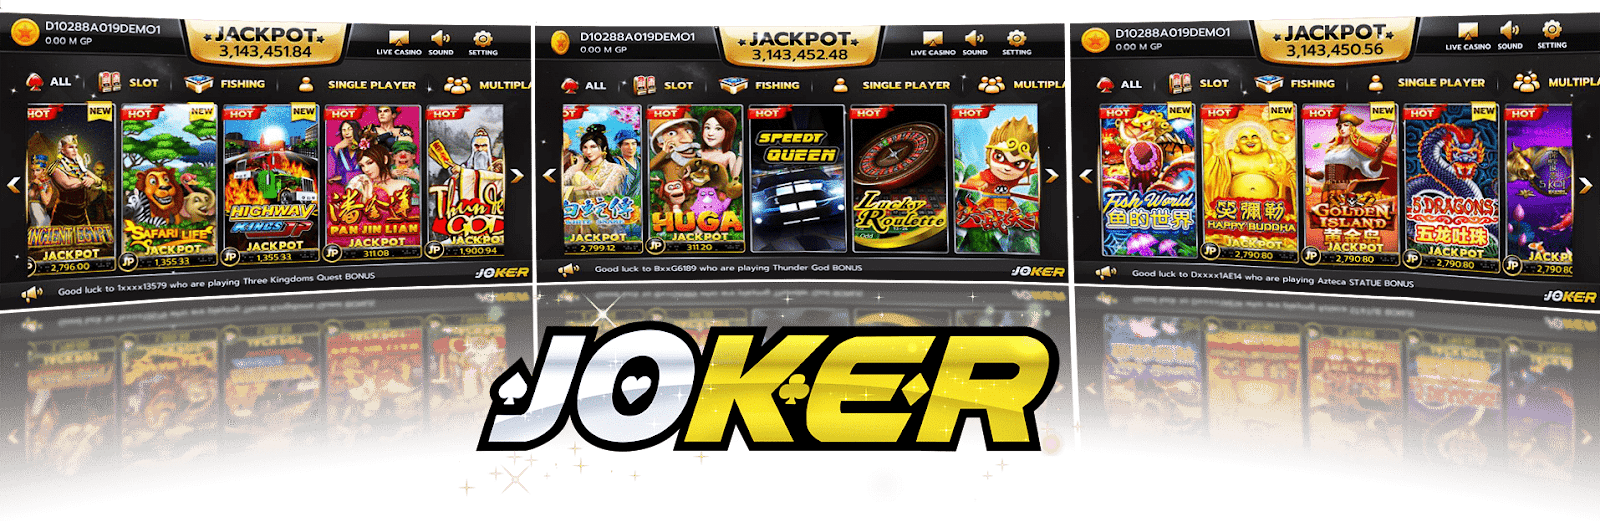 JOKER SLOT | แหล่งรวม เกมสล็อต ออนไลน์ สุดฮิต จากค่าย Gaming World